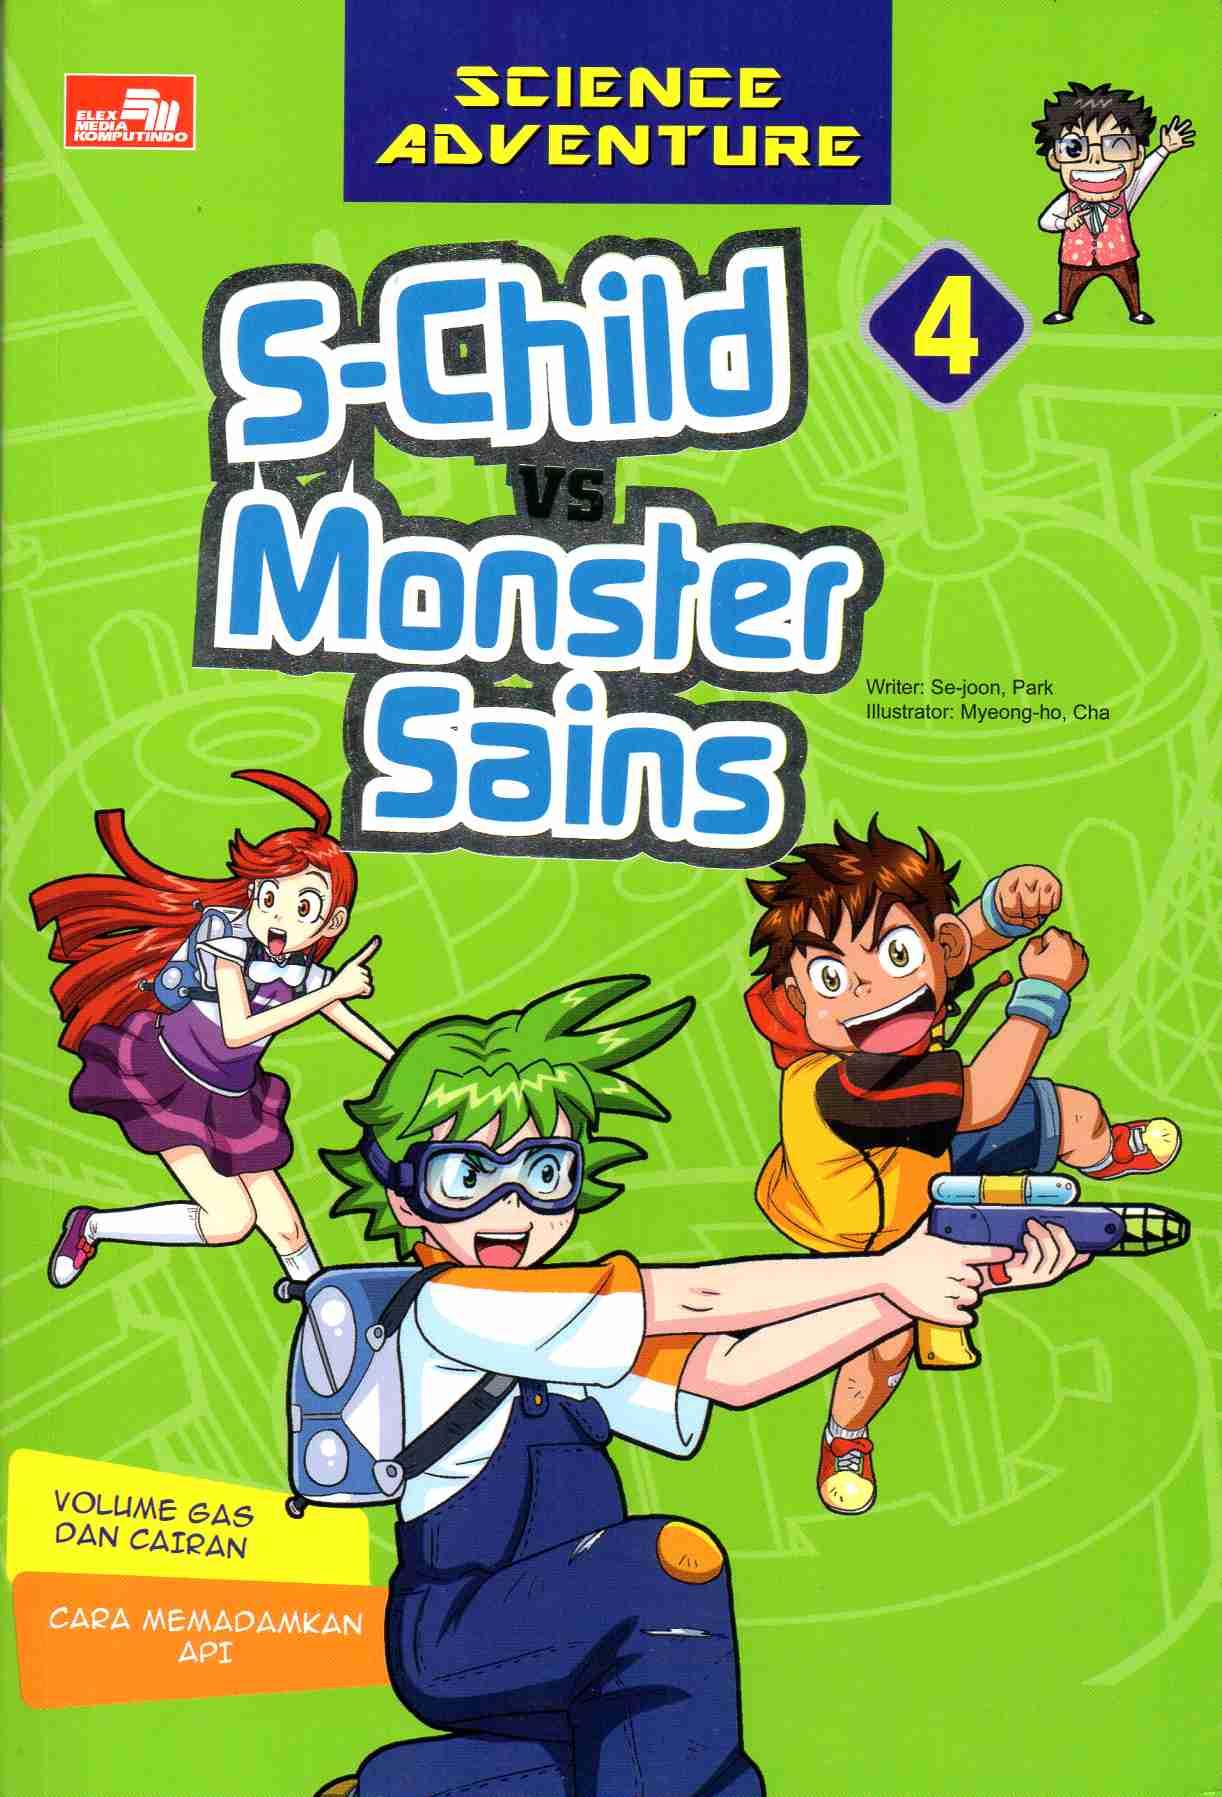 Science Adventure: S-Child VS Monster Sains Vol 4